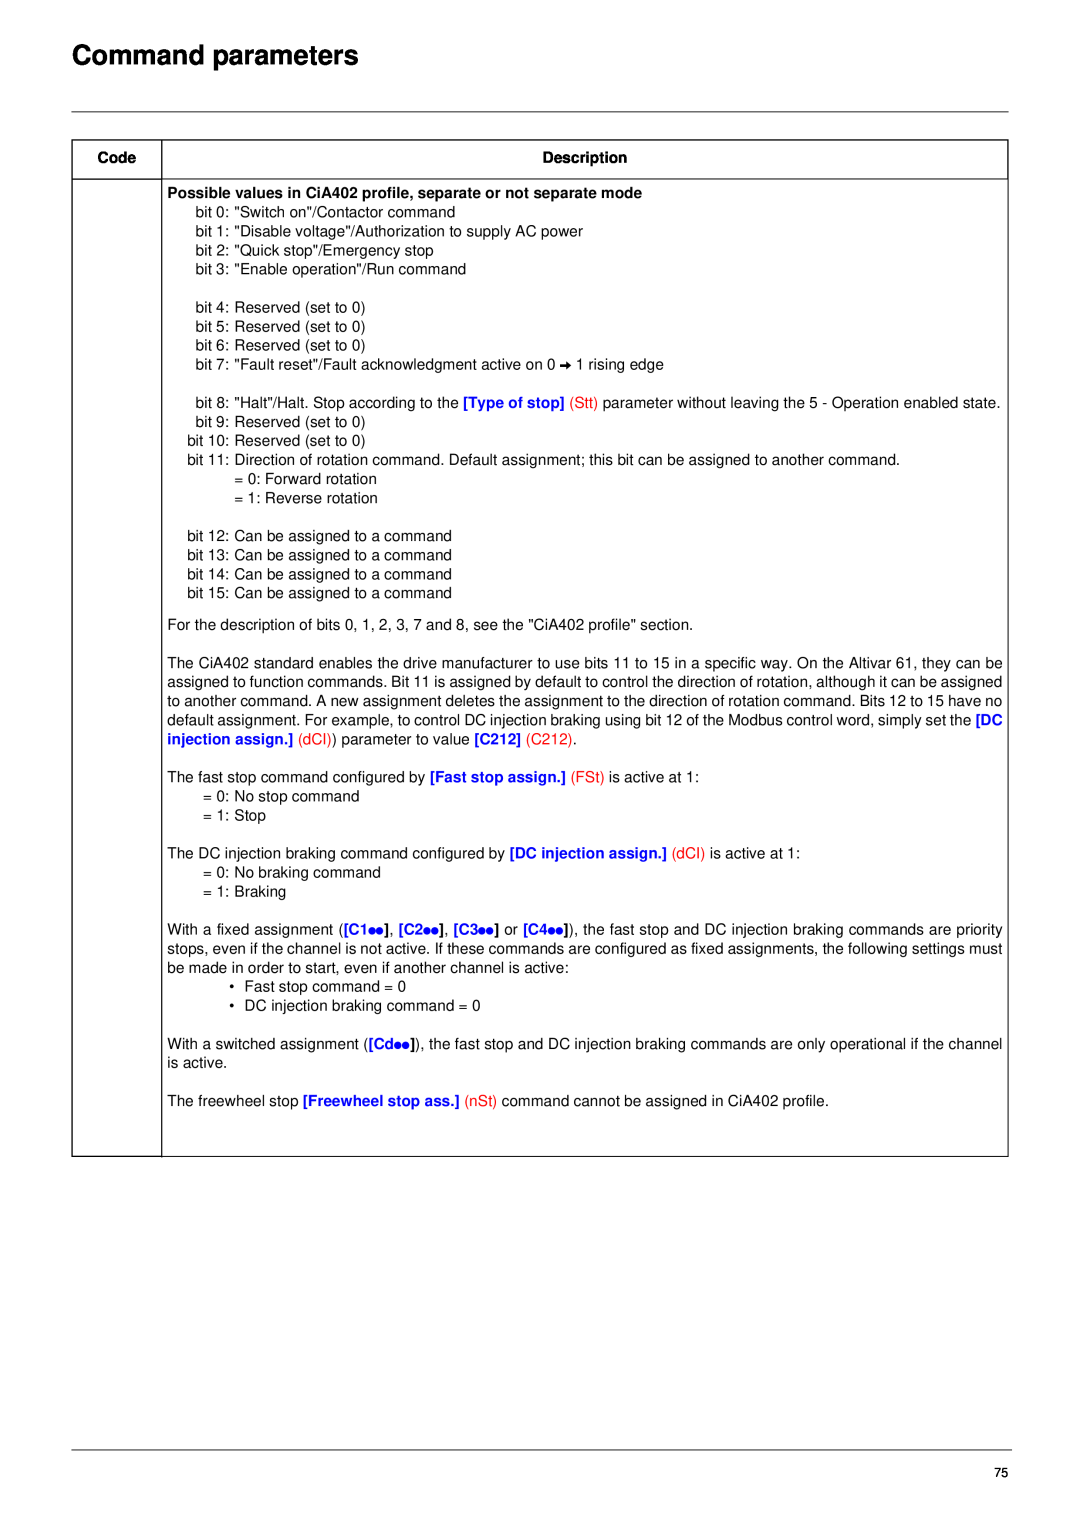 Schneider Electric 61 user manual Command parameters, Code, Description 